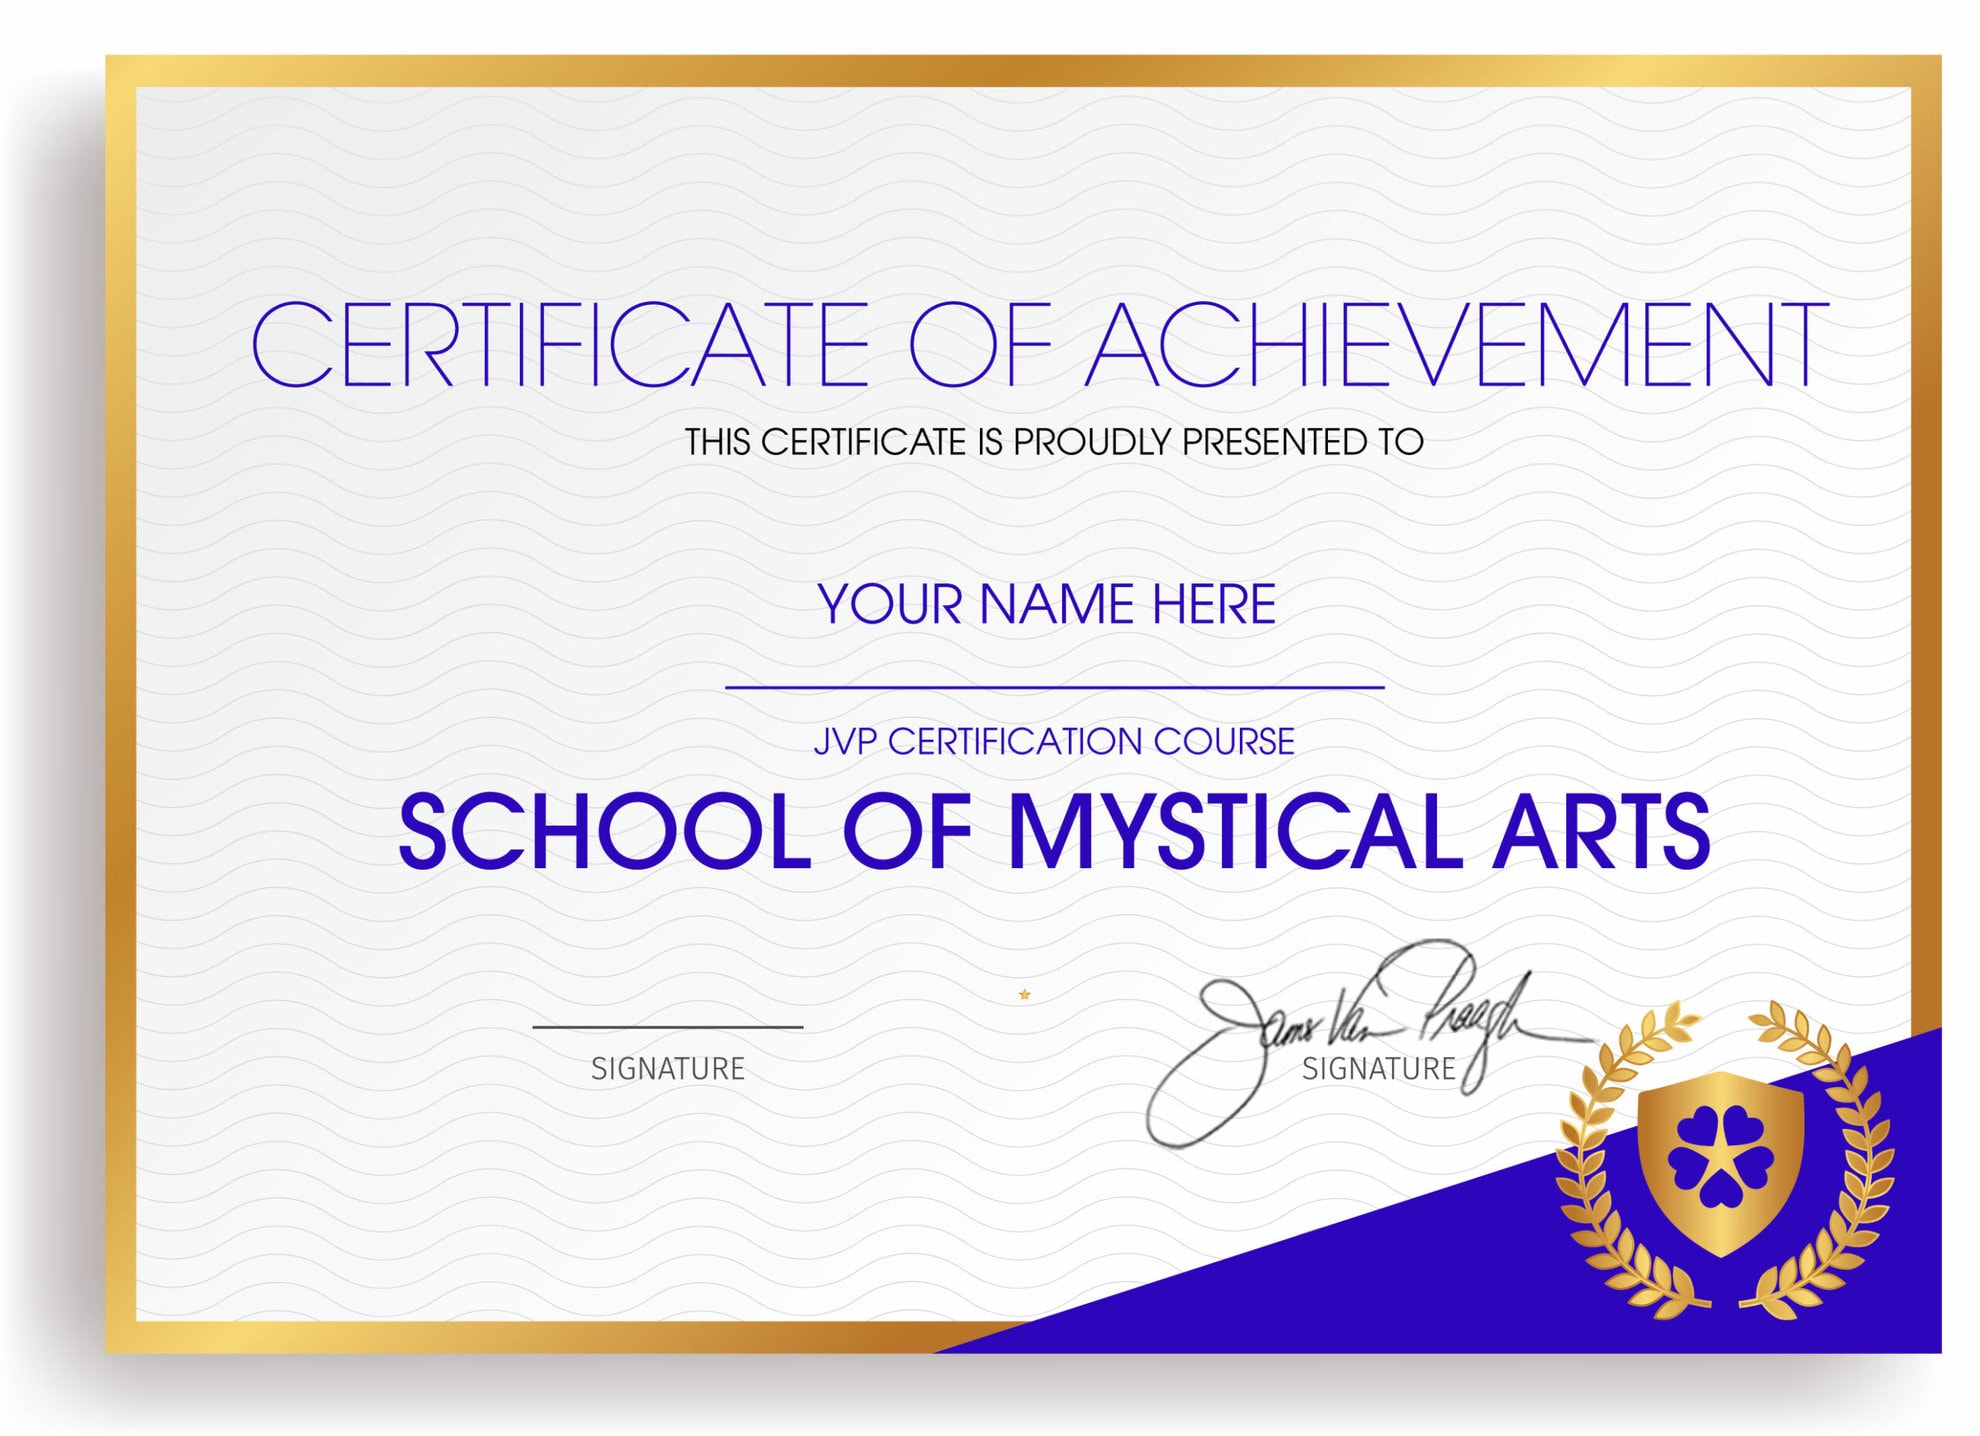 School of Mystical Arts